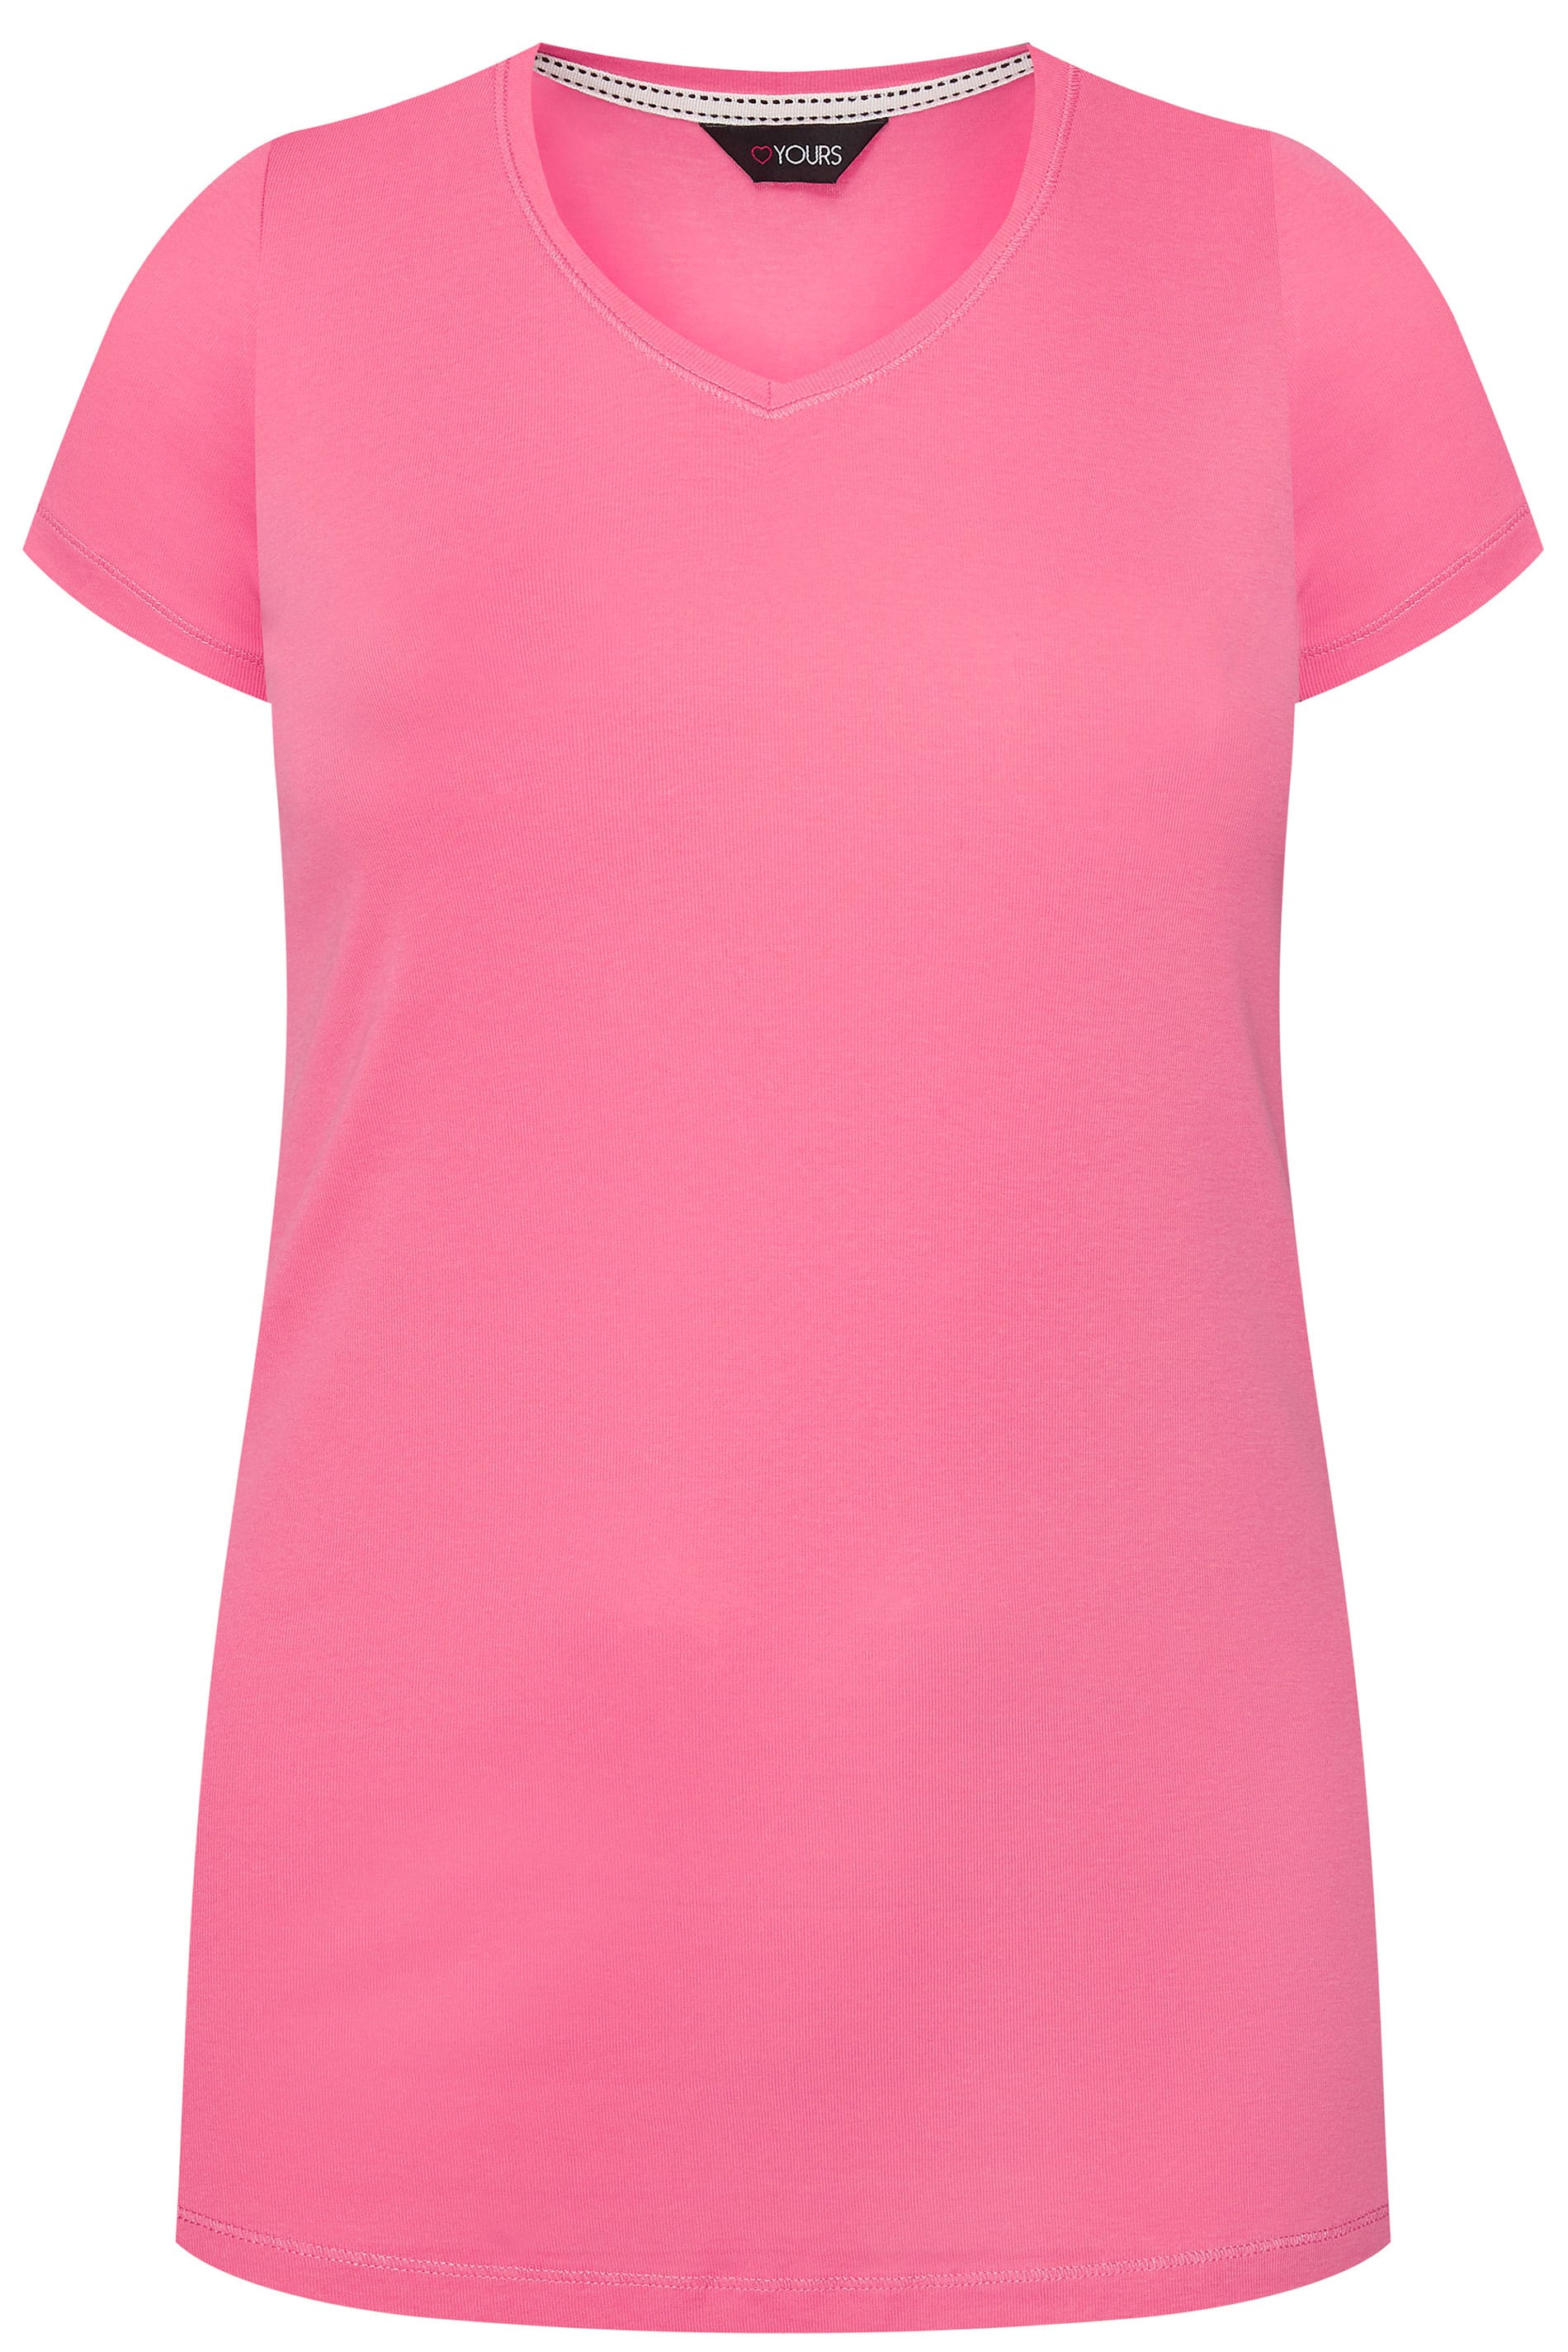 Plus Size Magenta Pink V Neck T Shirt Sizes 16 To 36 Yours Clothing